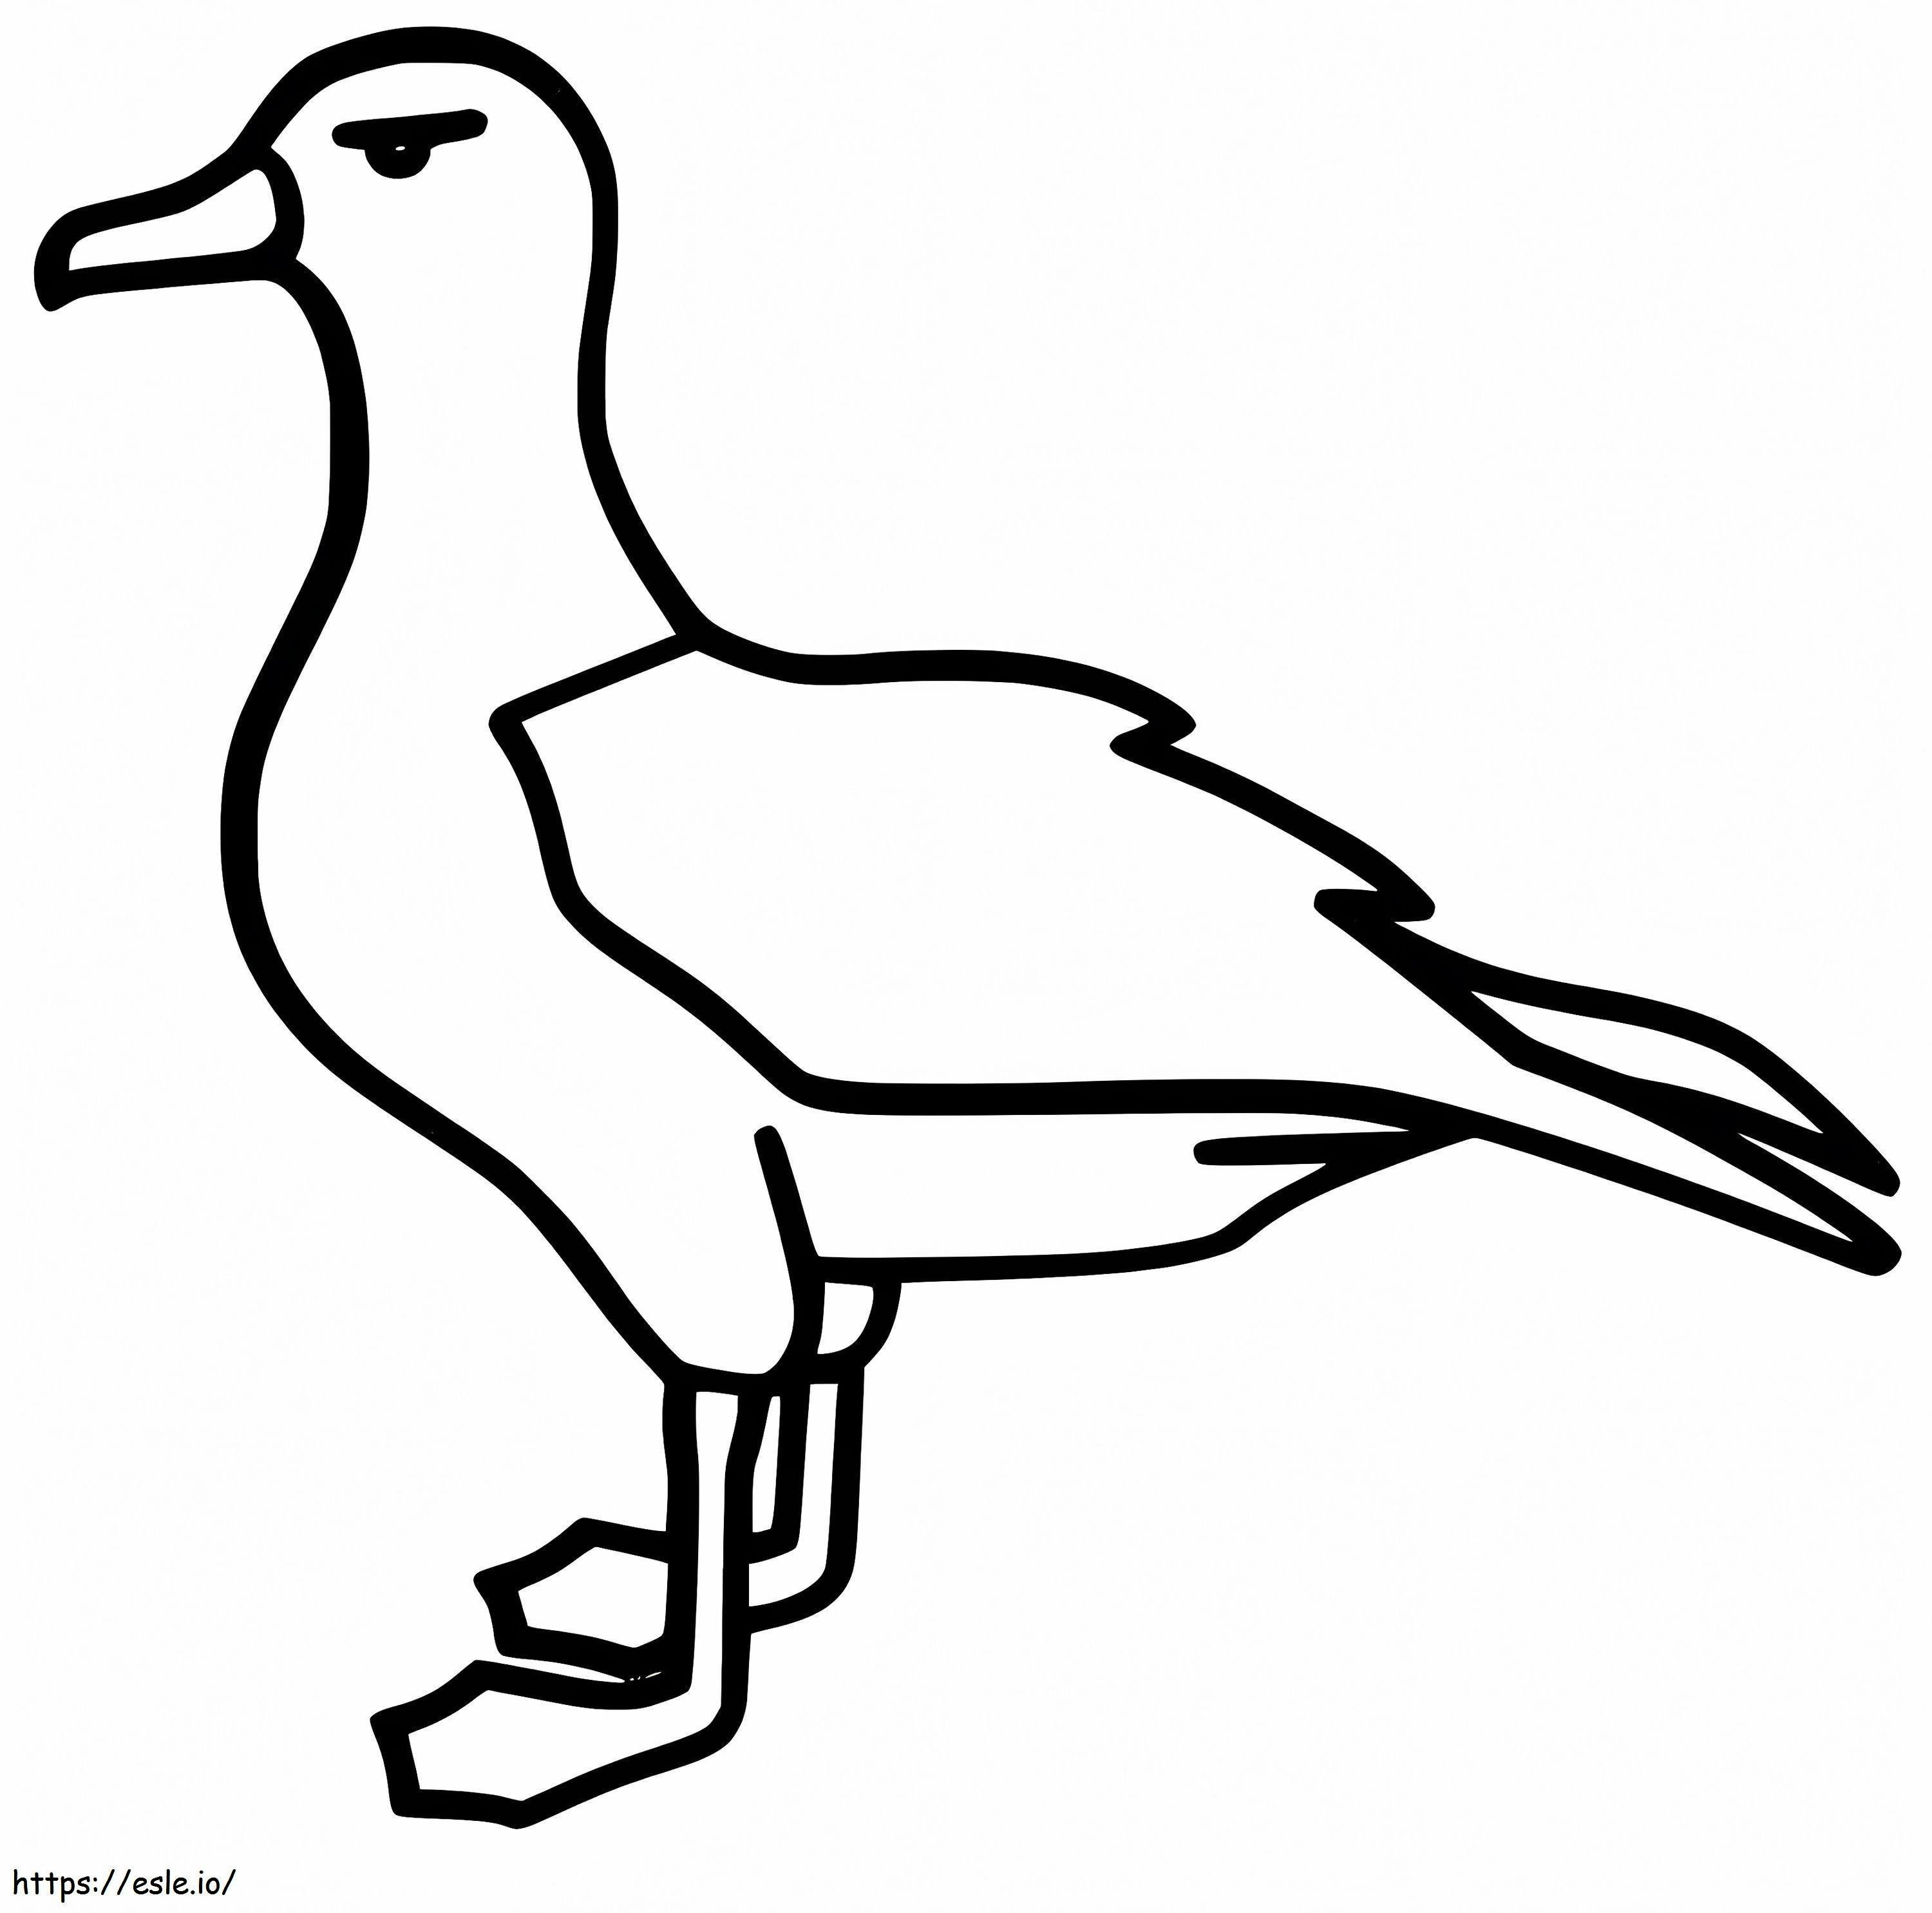 Printable Albatross coloring page